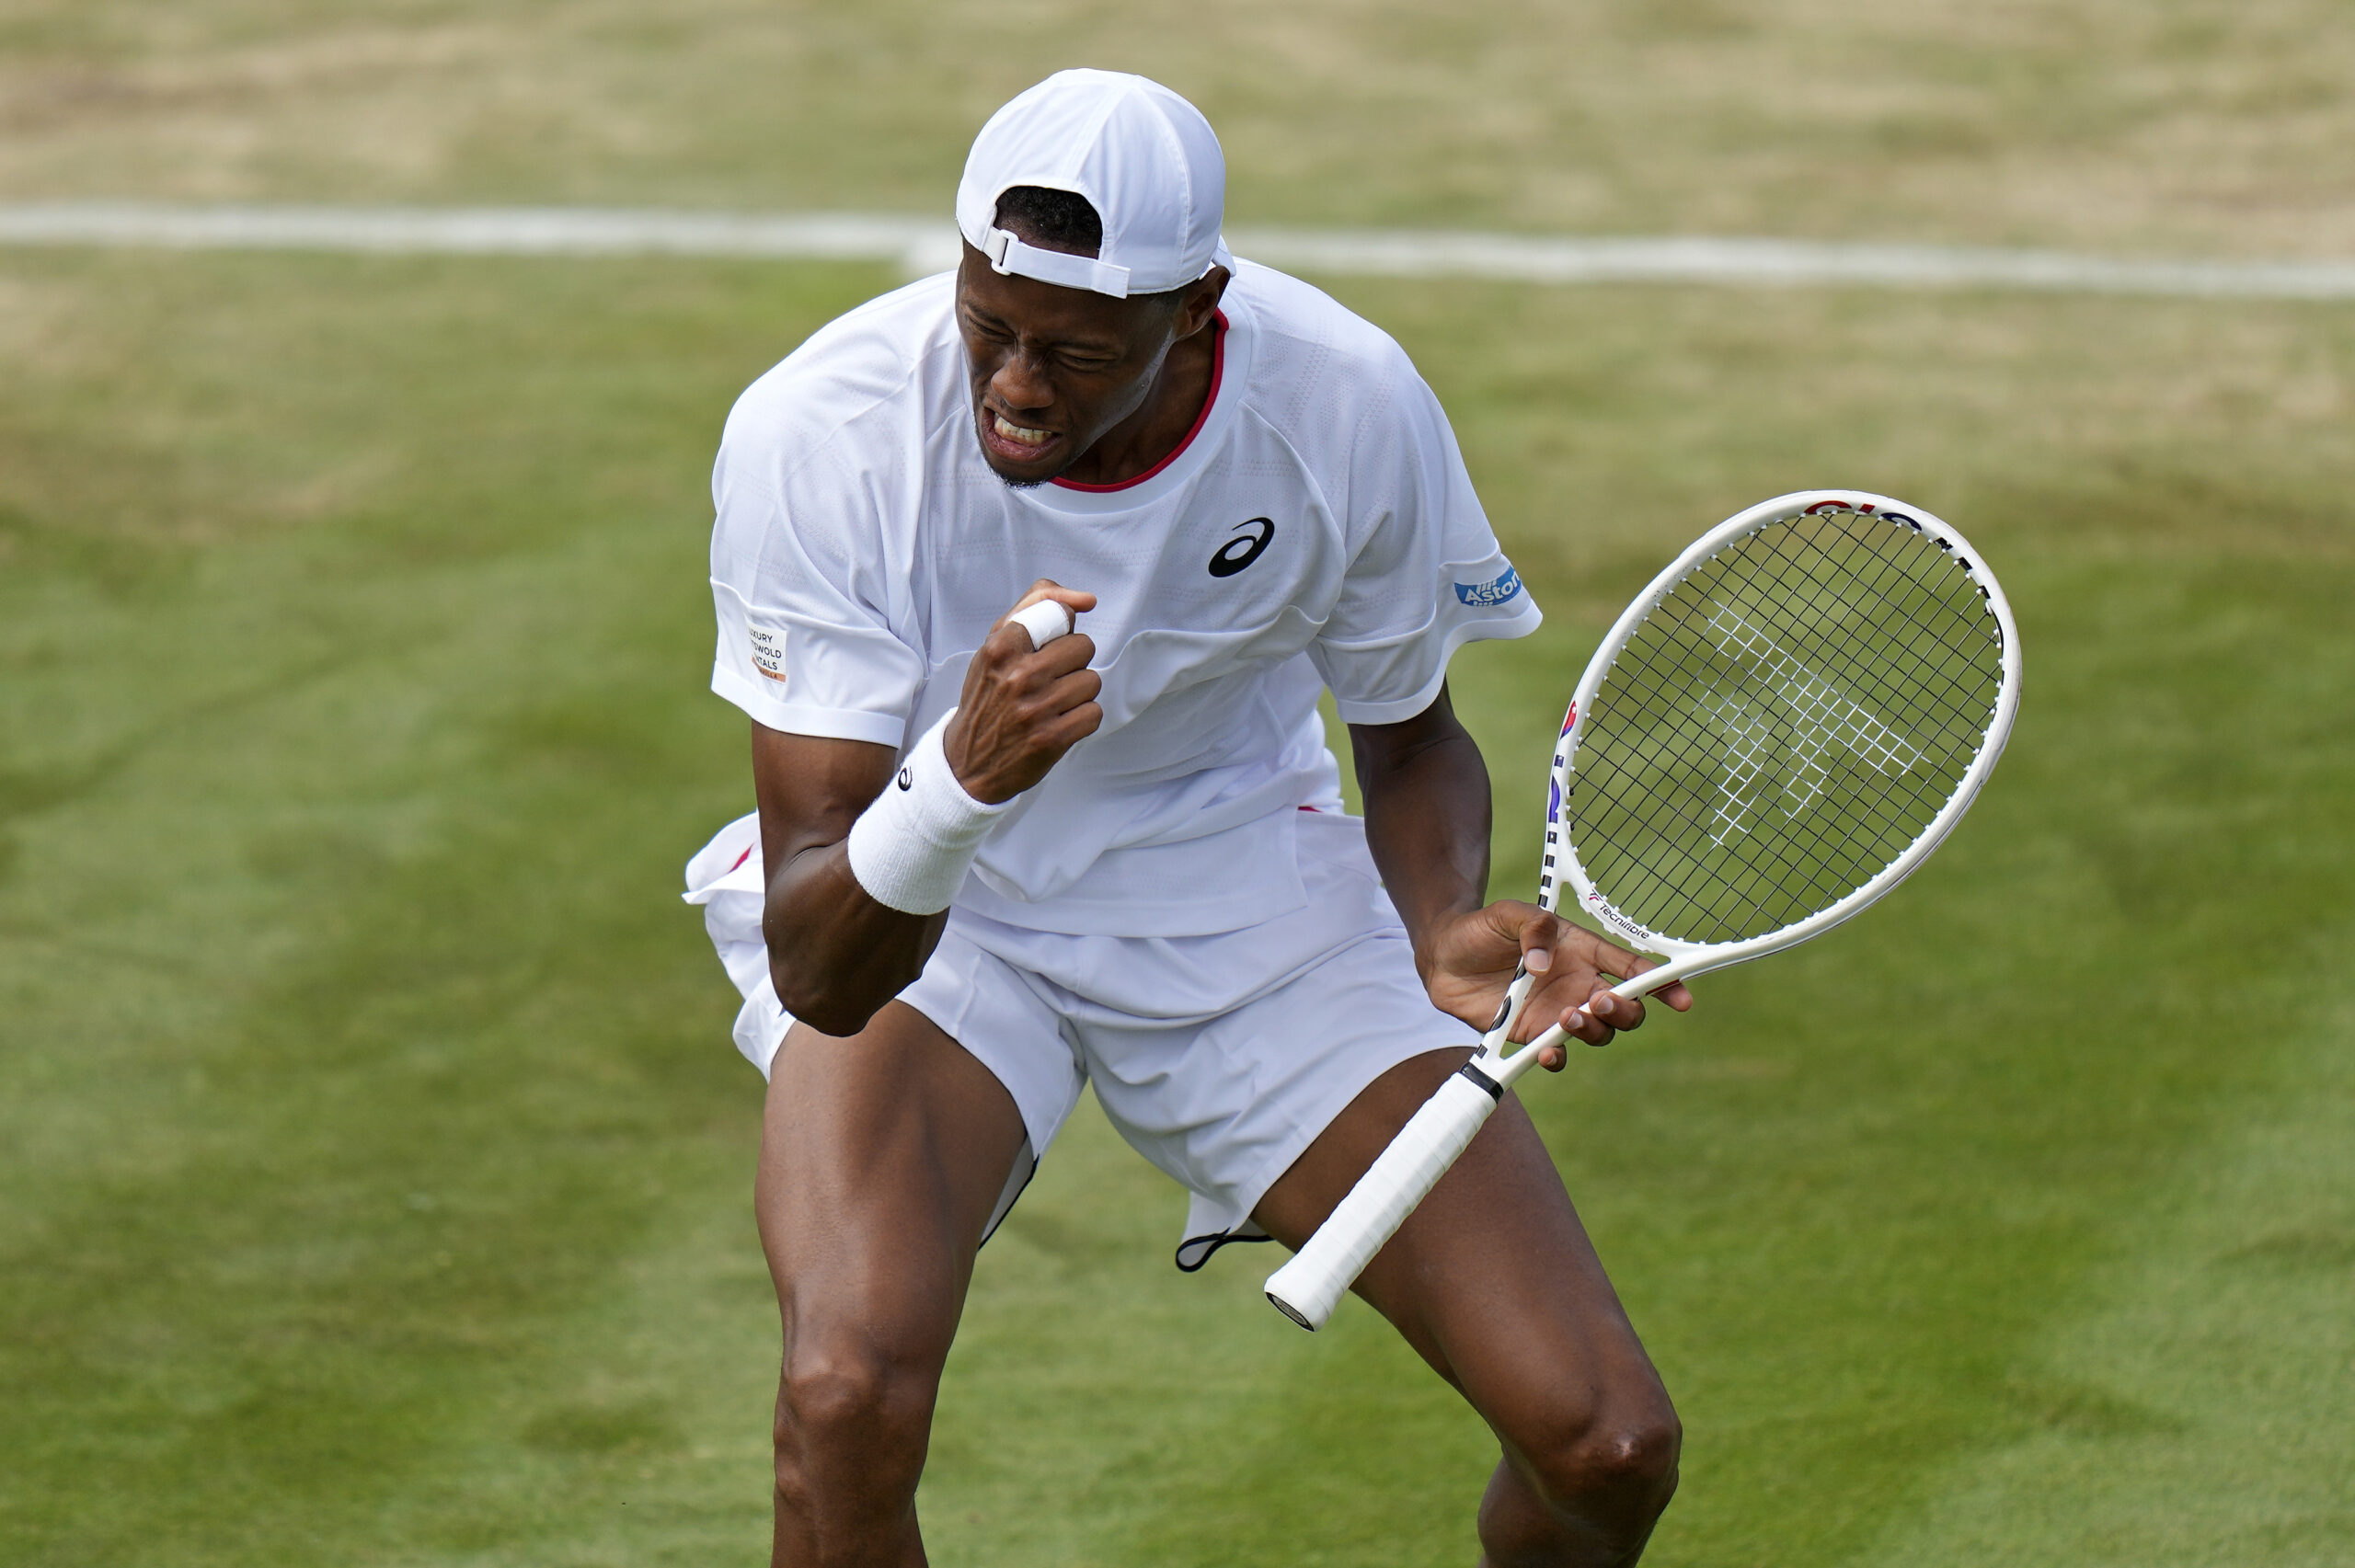 Atlanta native Eubanks stuns Tsitsipas at Wimbledon to reach his first Grand Slam quarterfinal